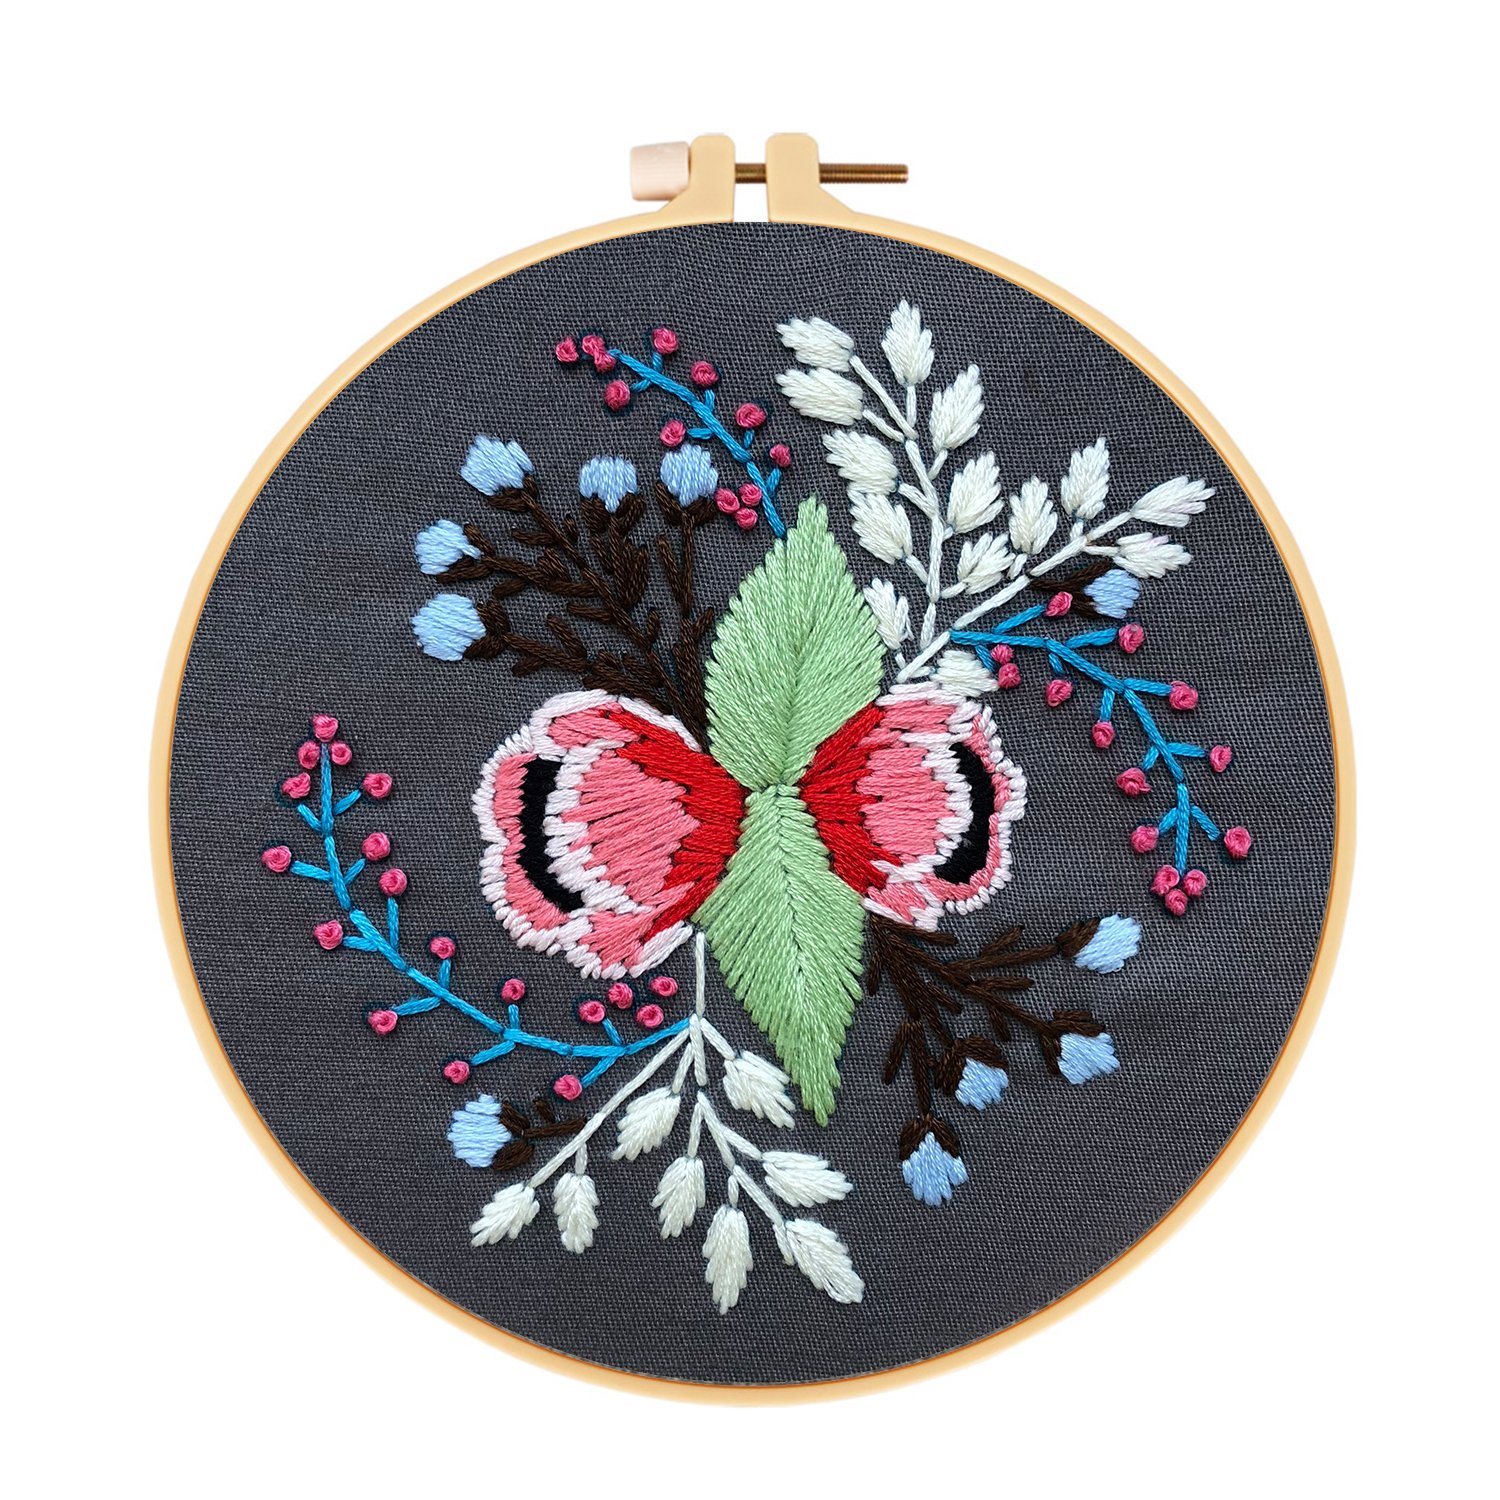 DIY Handmade Embroidery Cross stitch kit - Retro Floral Pattern